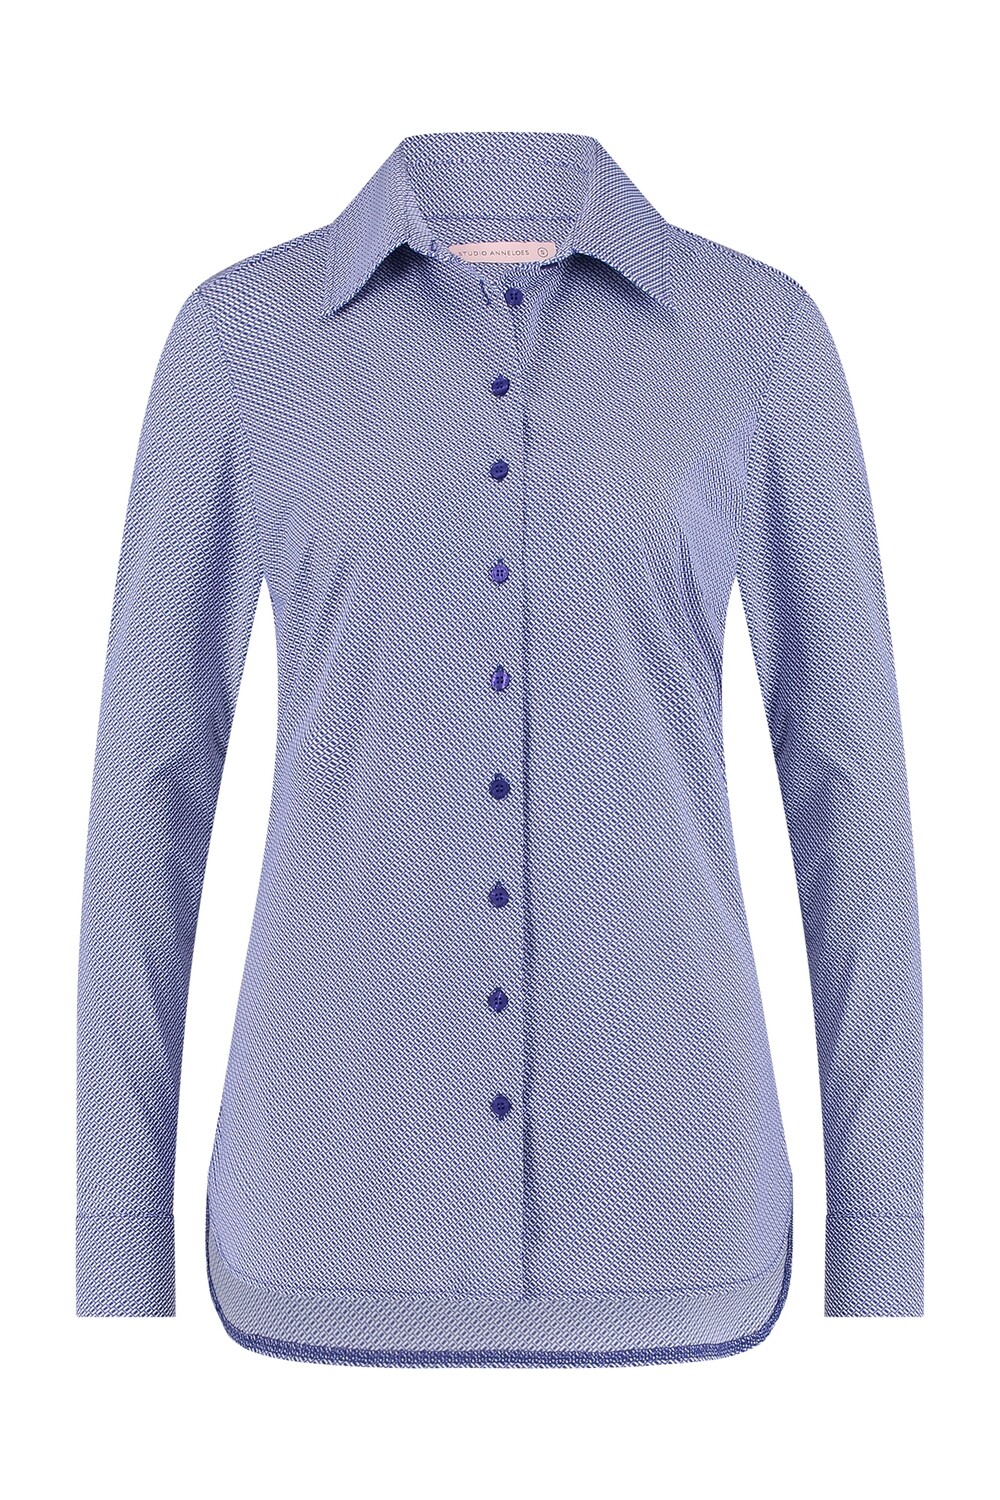 Poppy block blouse, off white/ purple blue